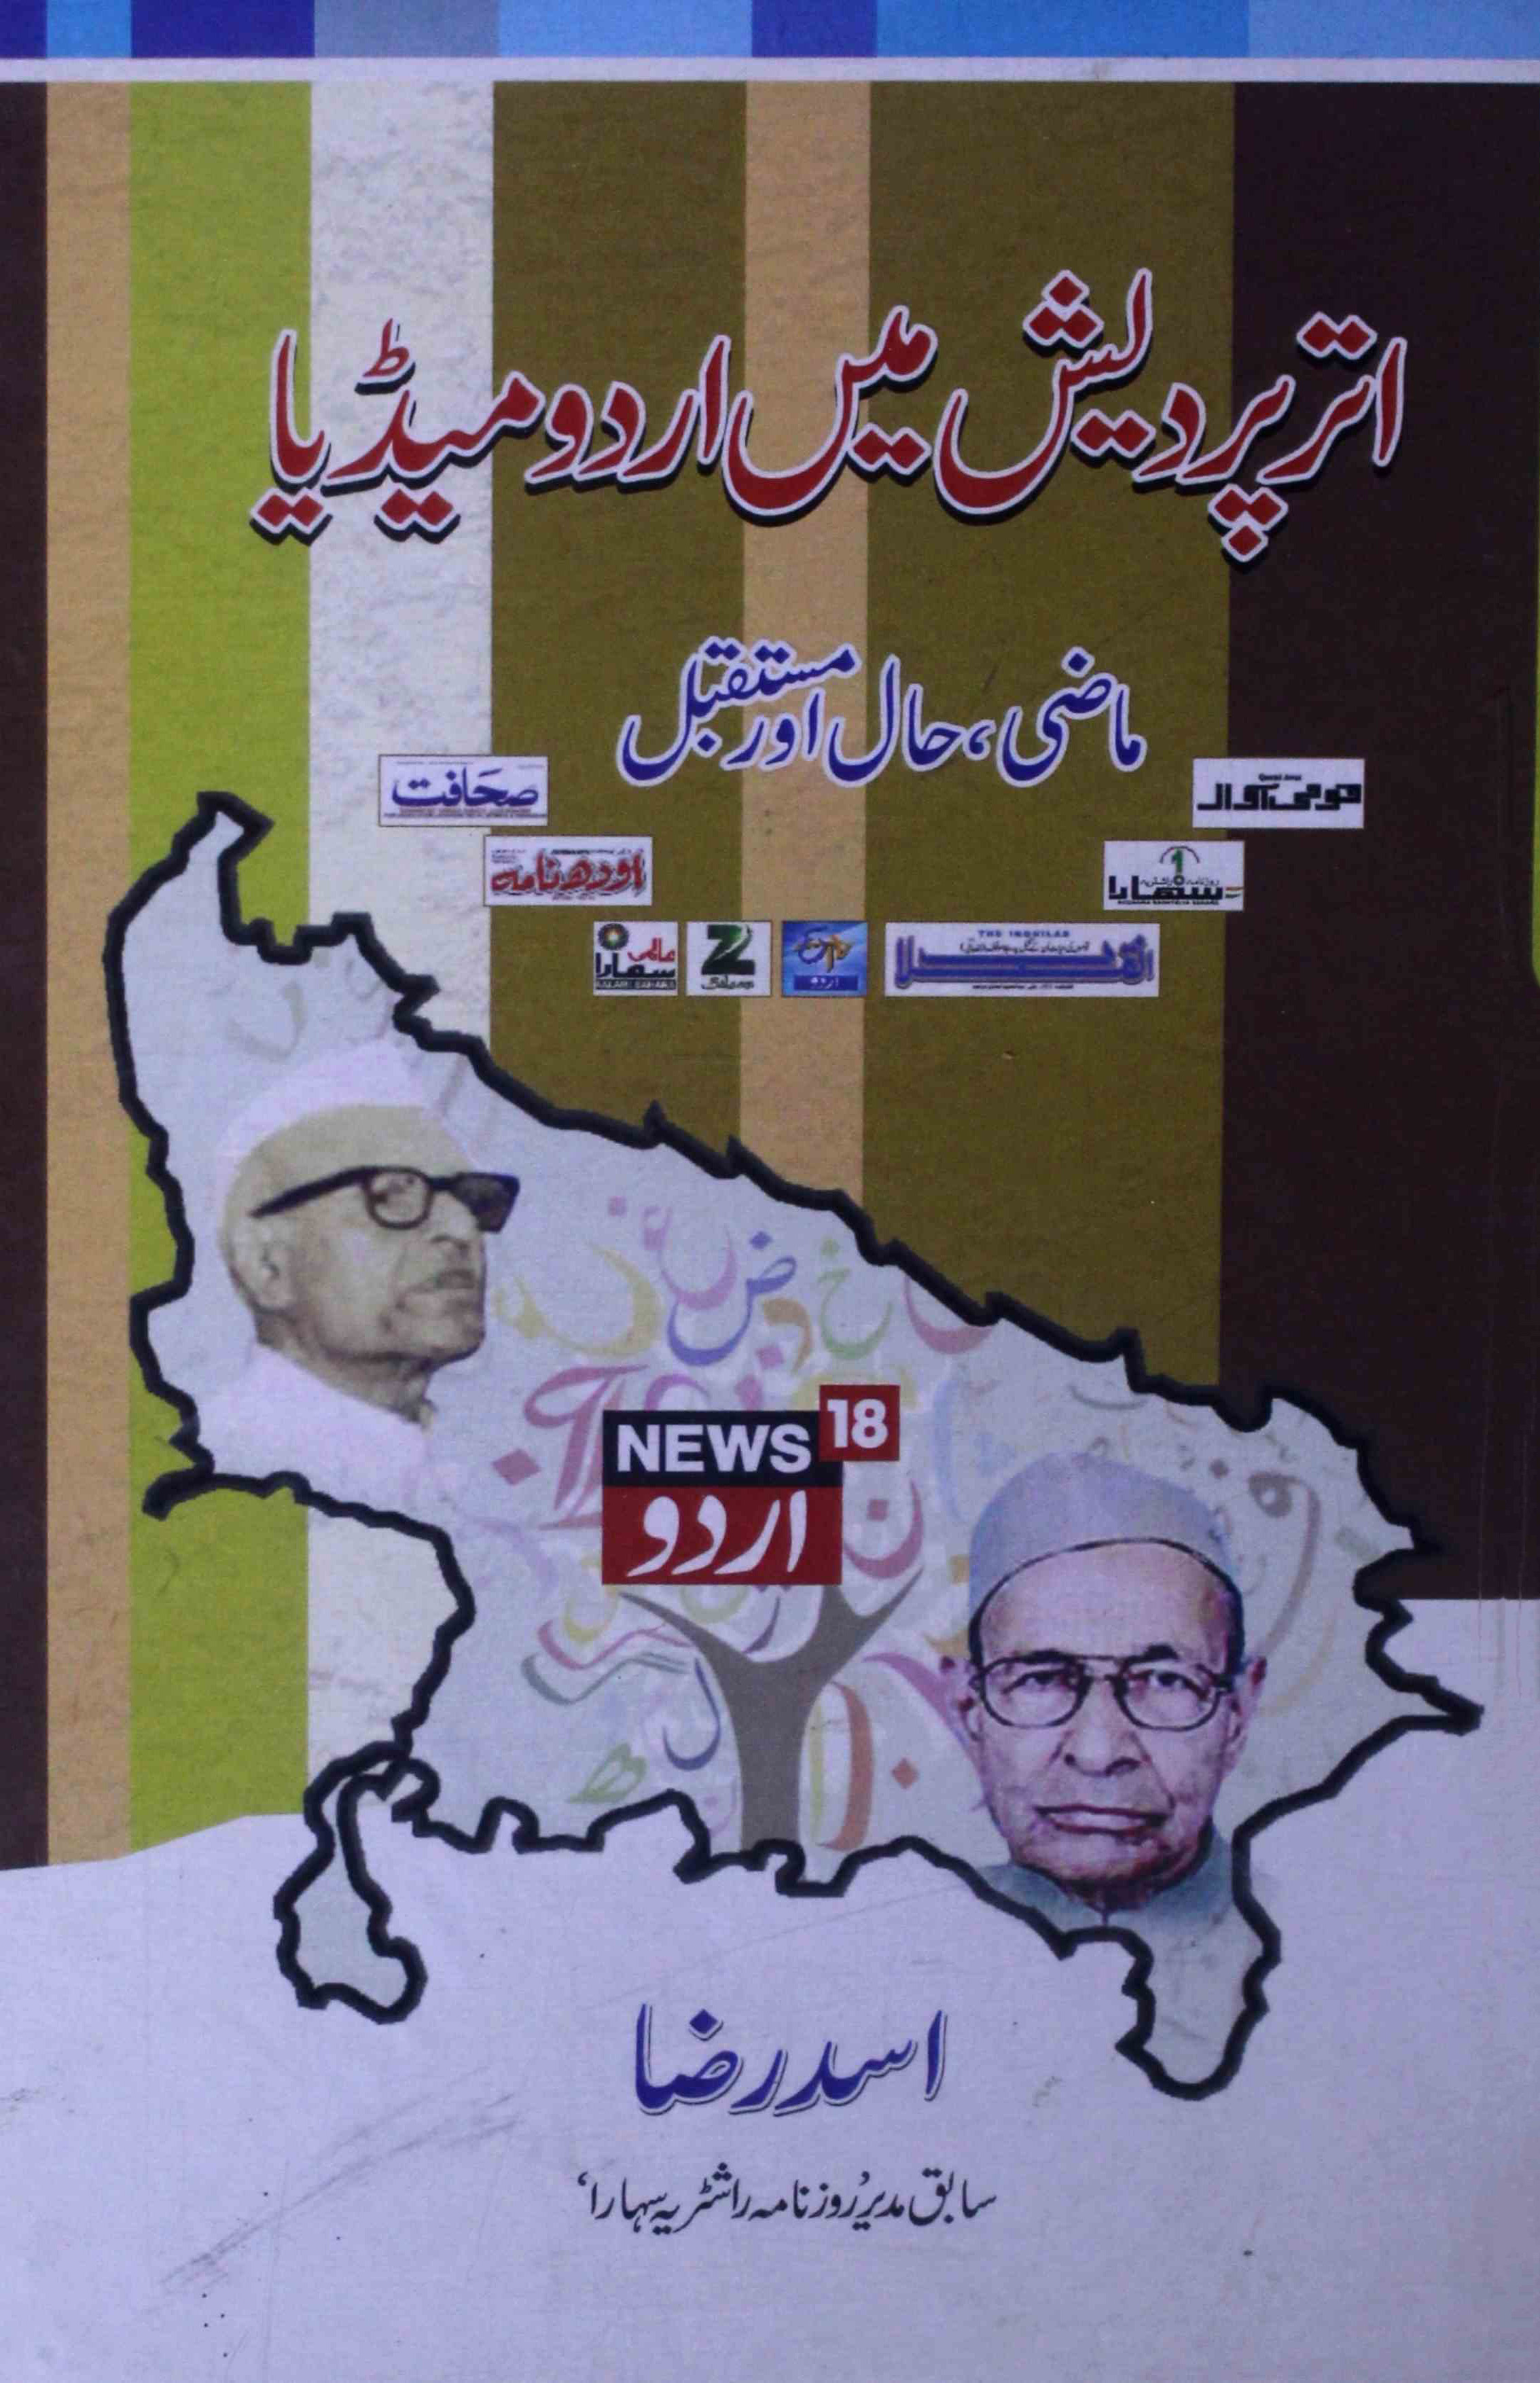 Uttar Pradesh Mein Urdu Media